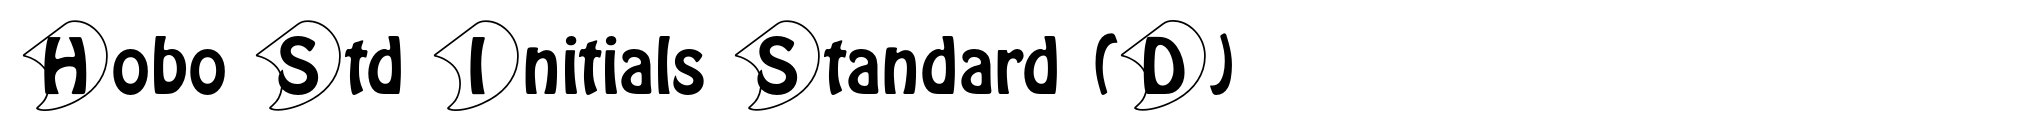 Hobo Std Initials Standard (D) image